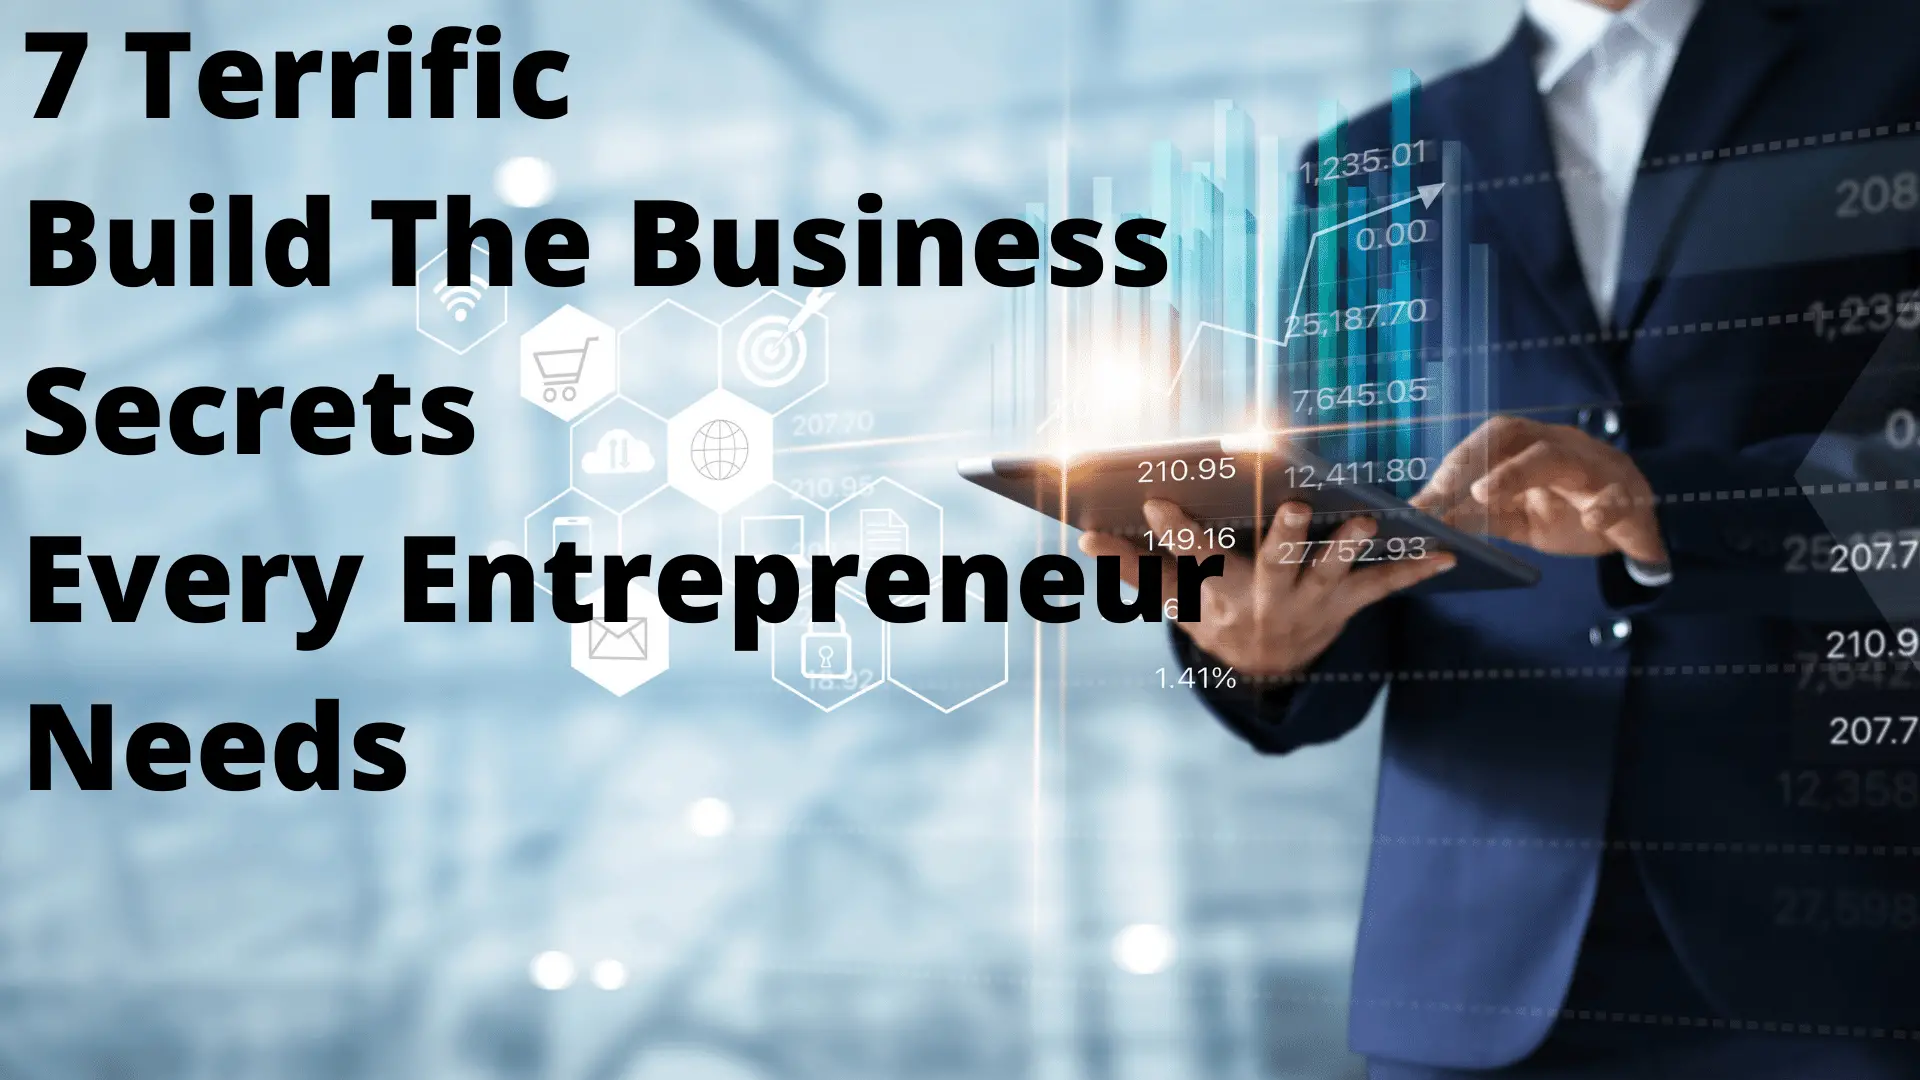 7 Terrific Build The Business Secrets Every Entrepreneur Needs